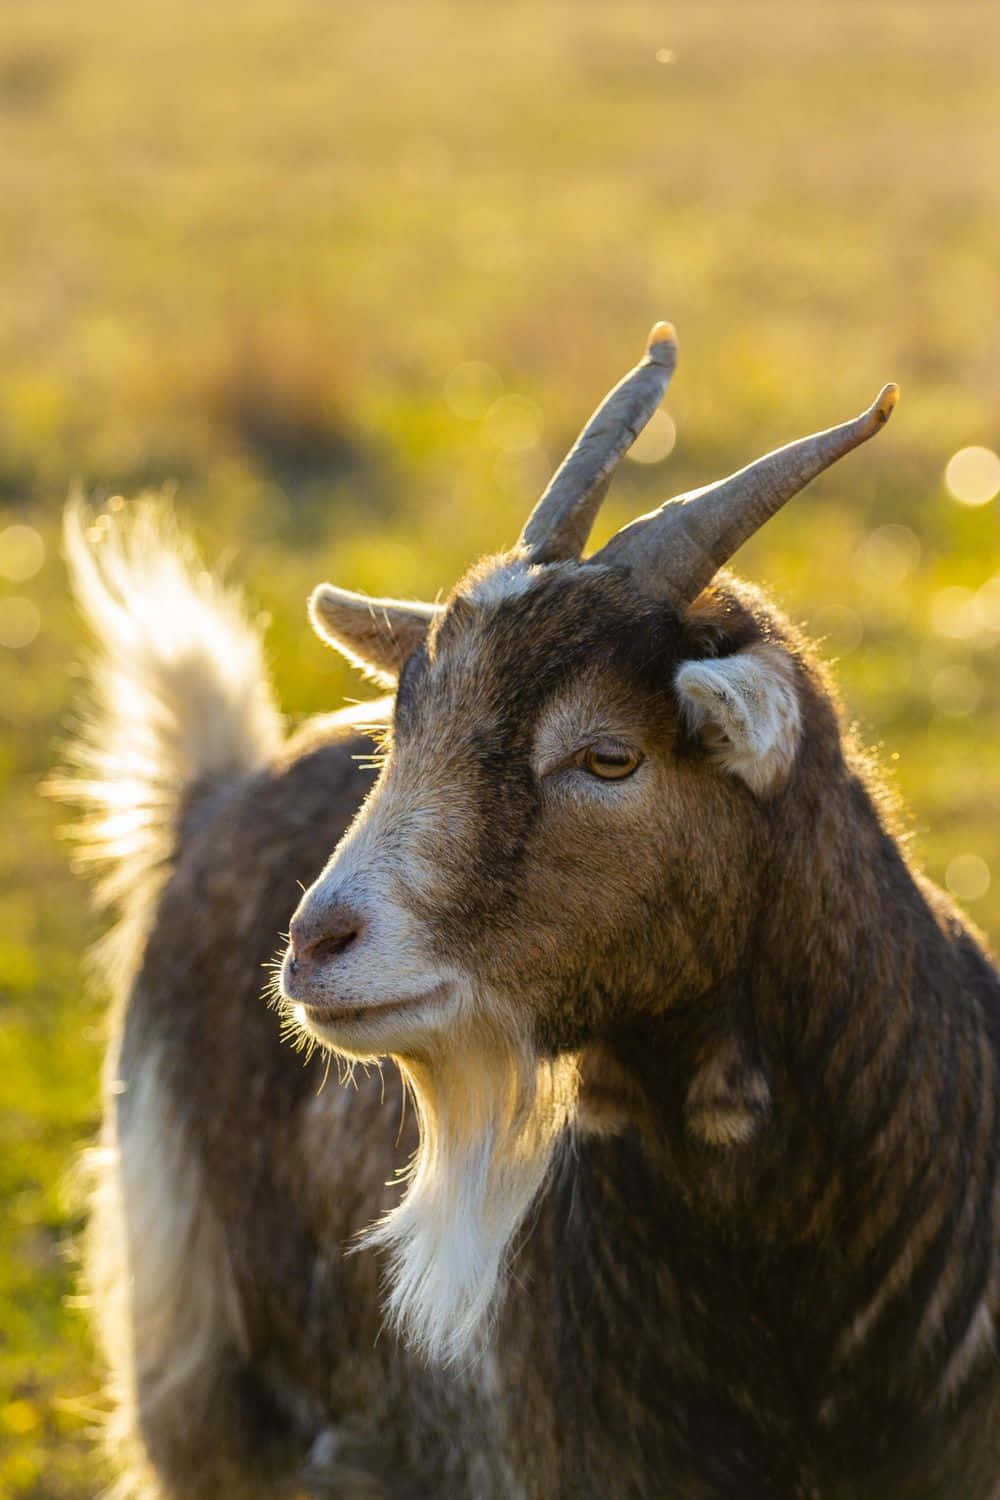 Cute Goat Against Blurred Grass Picture